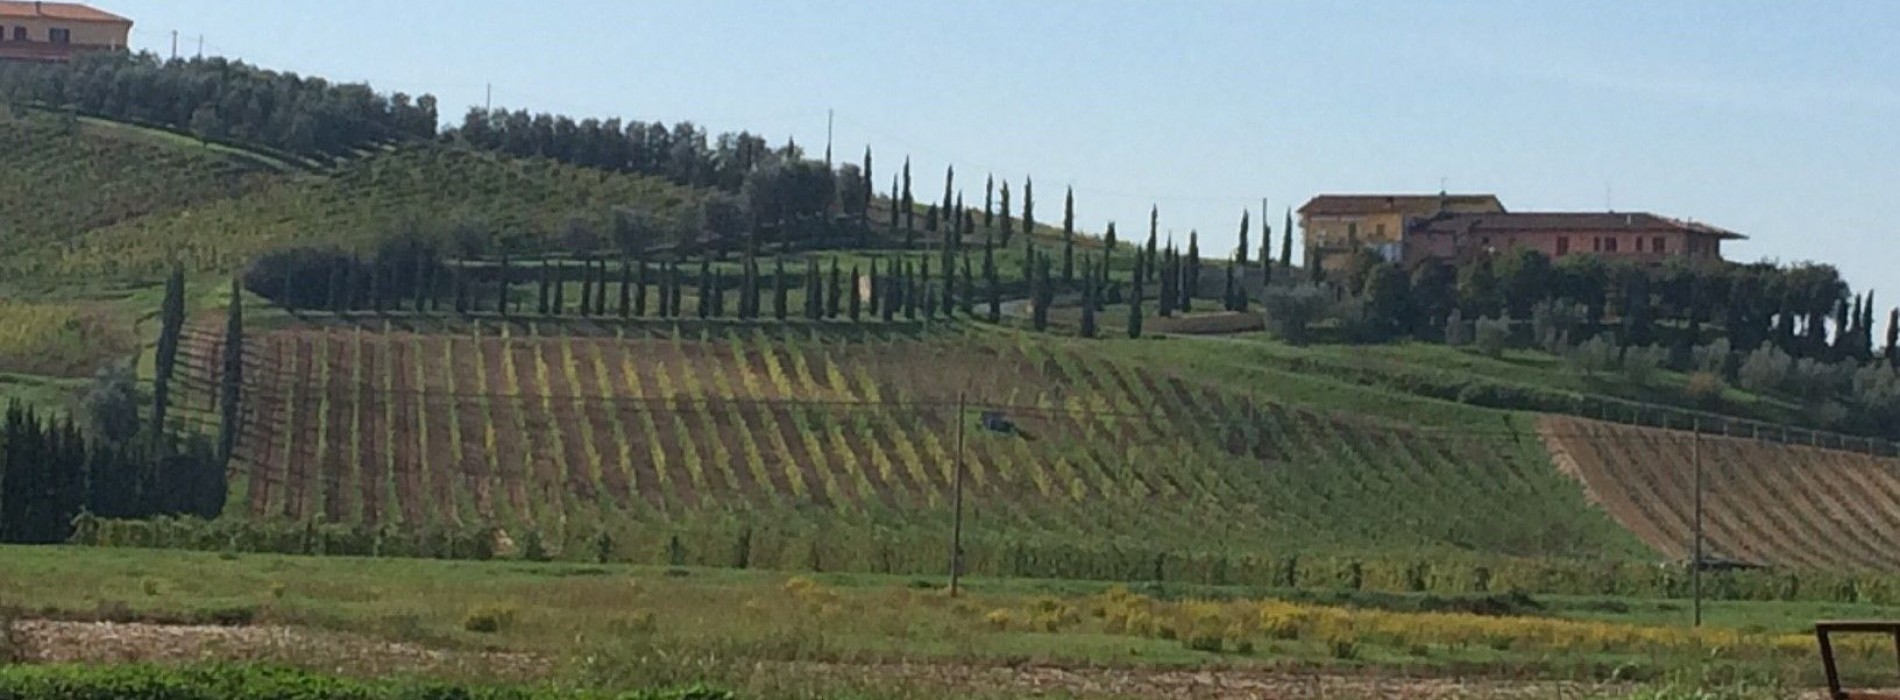 Italian vineyards.jpg